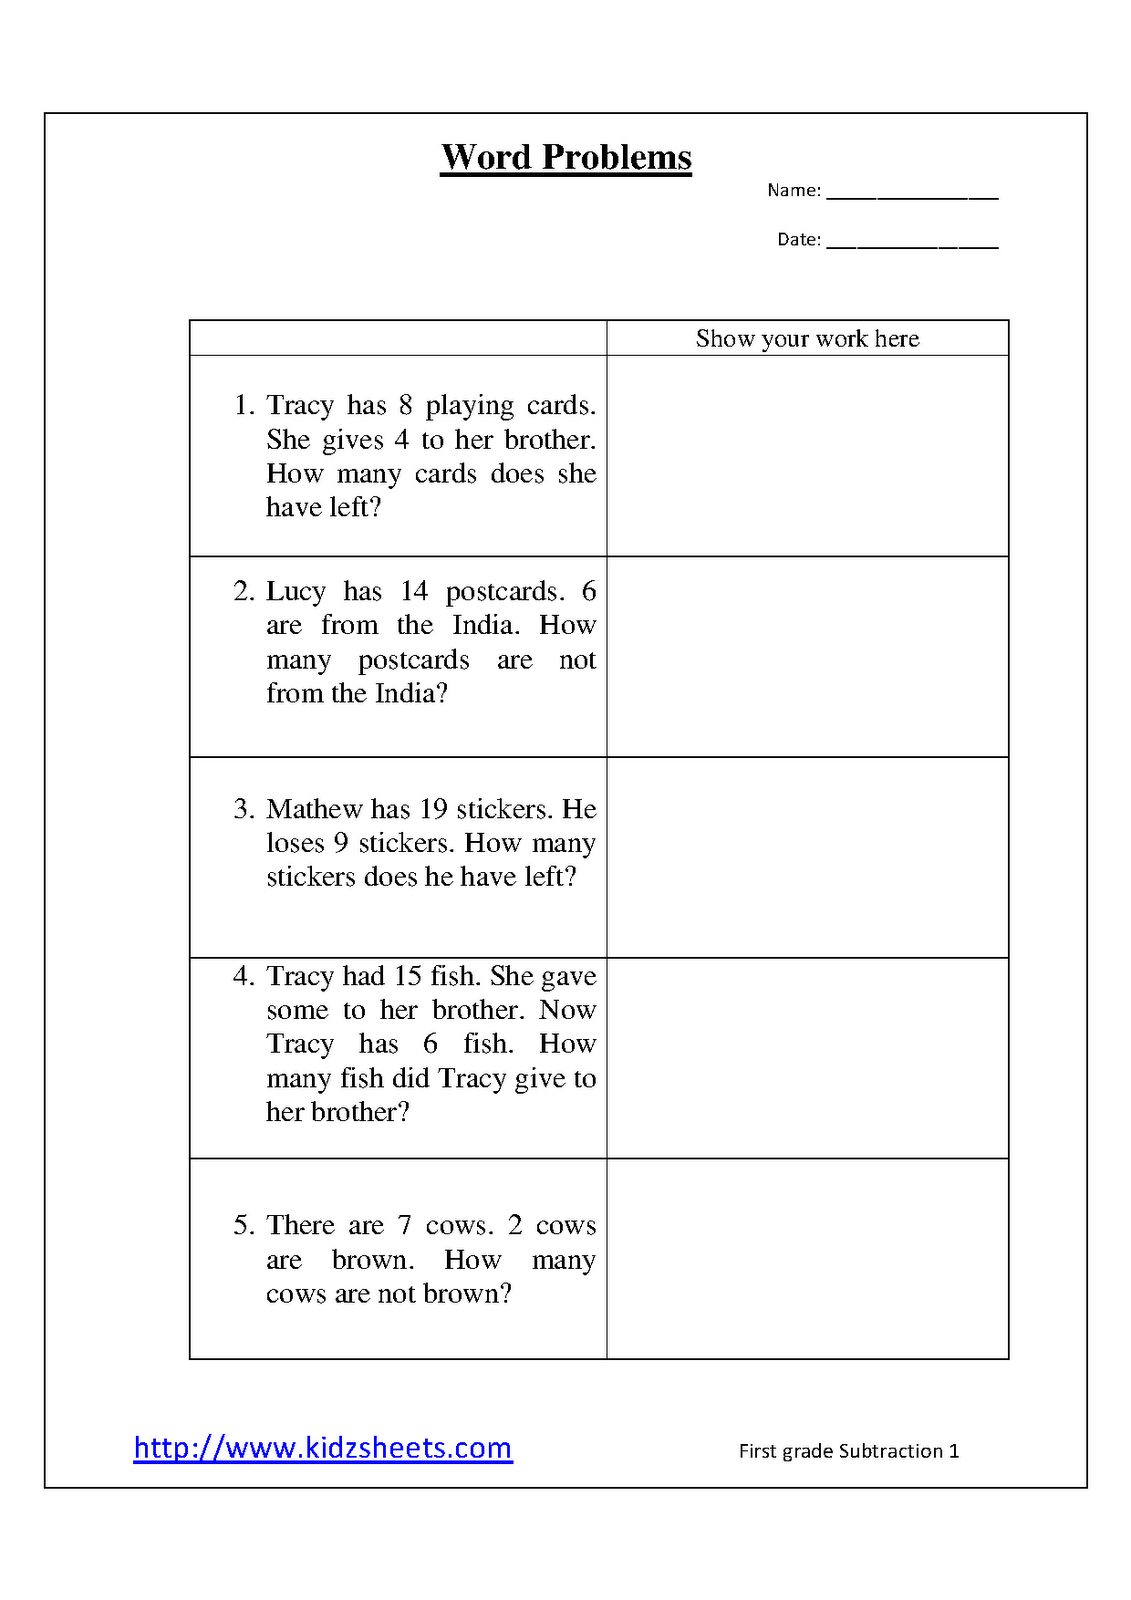 Kidz Worksheets: First Grade Word Problems1 - Free Printable Math Worksheets Word Problems First Grade